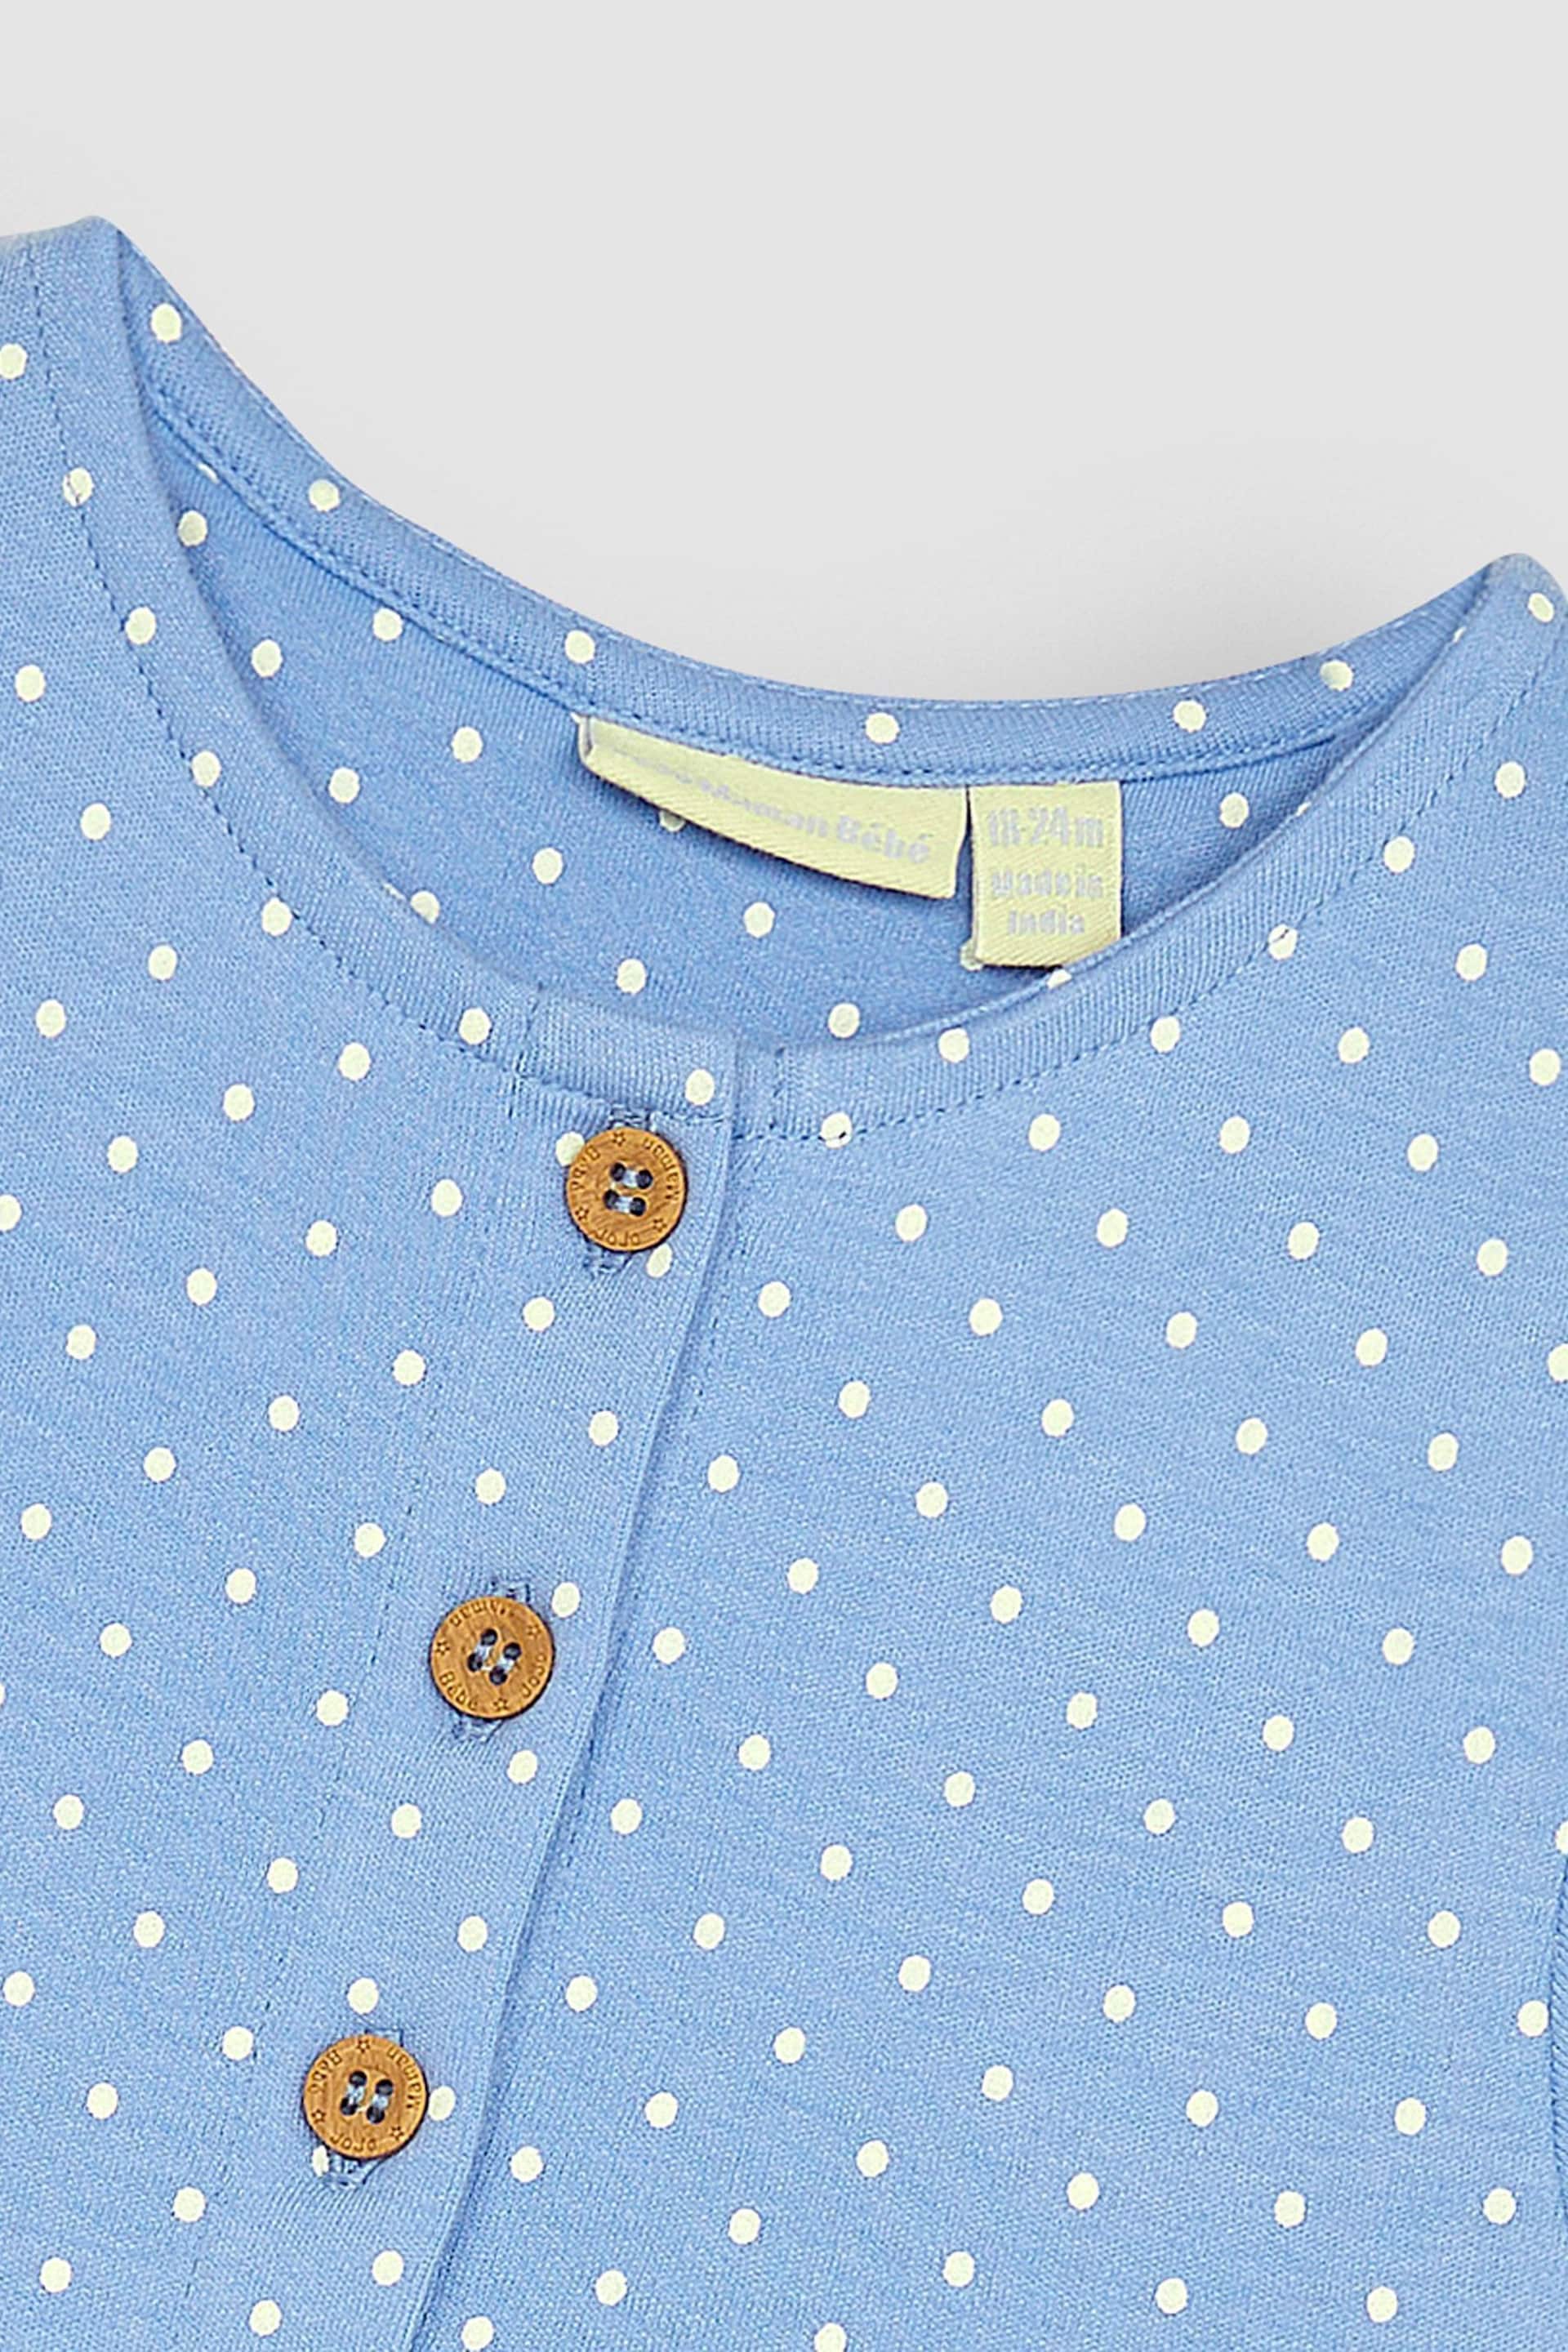 JoJo Maman Bébé Blue Guinea Pig & Duck Spot Appliqué Button Front Jersey Dress - Image 2 of 3